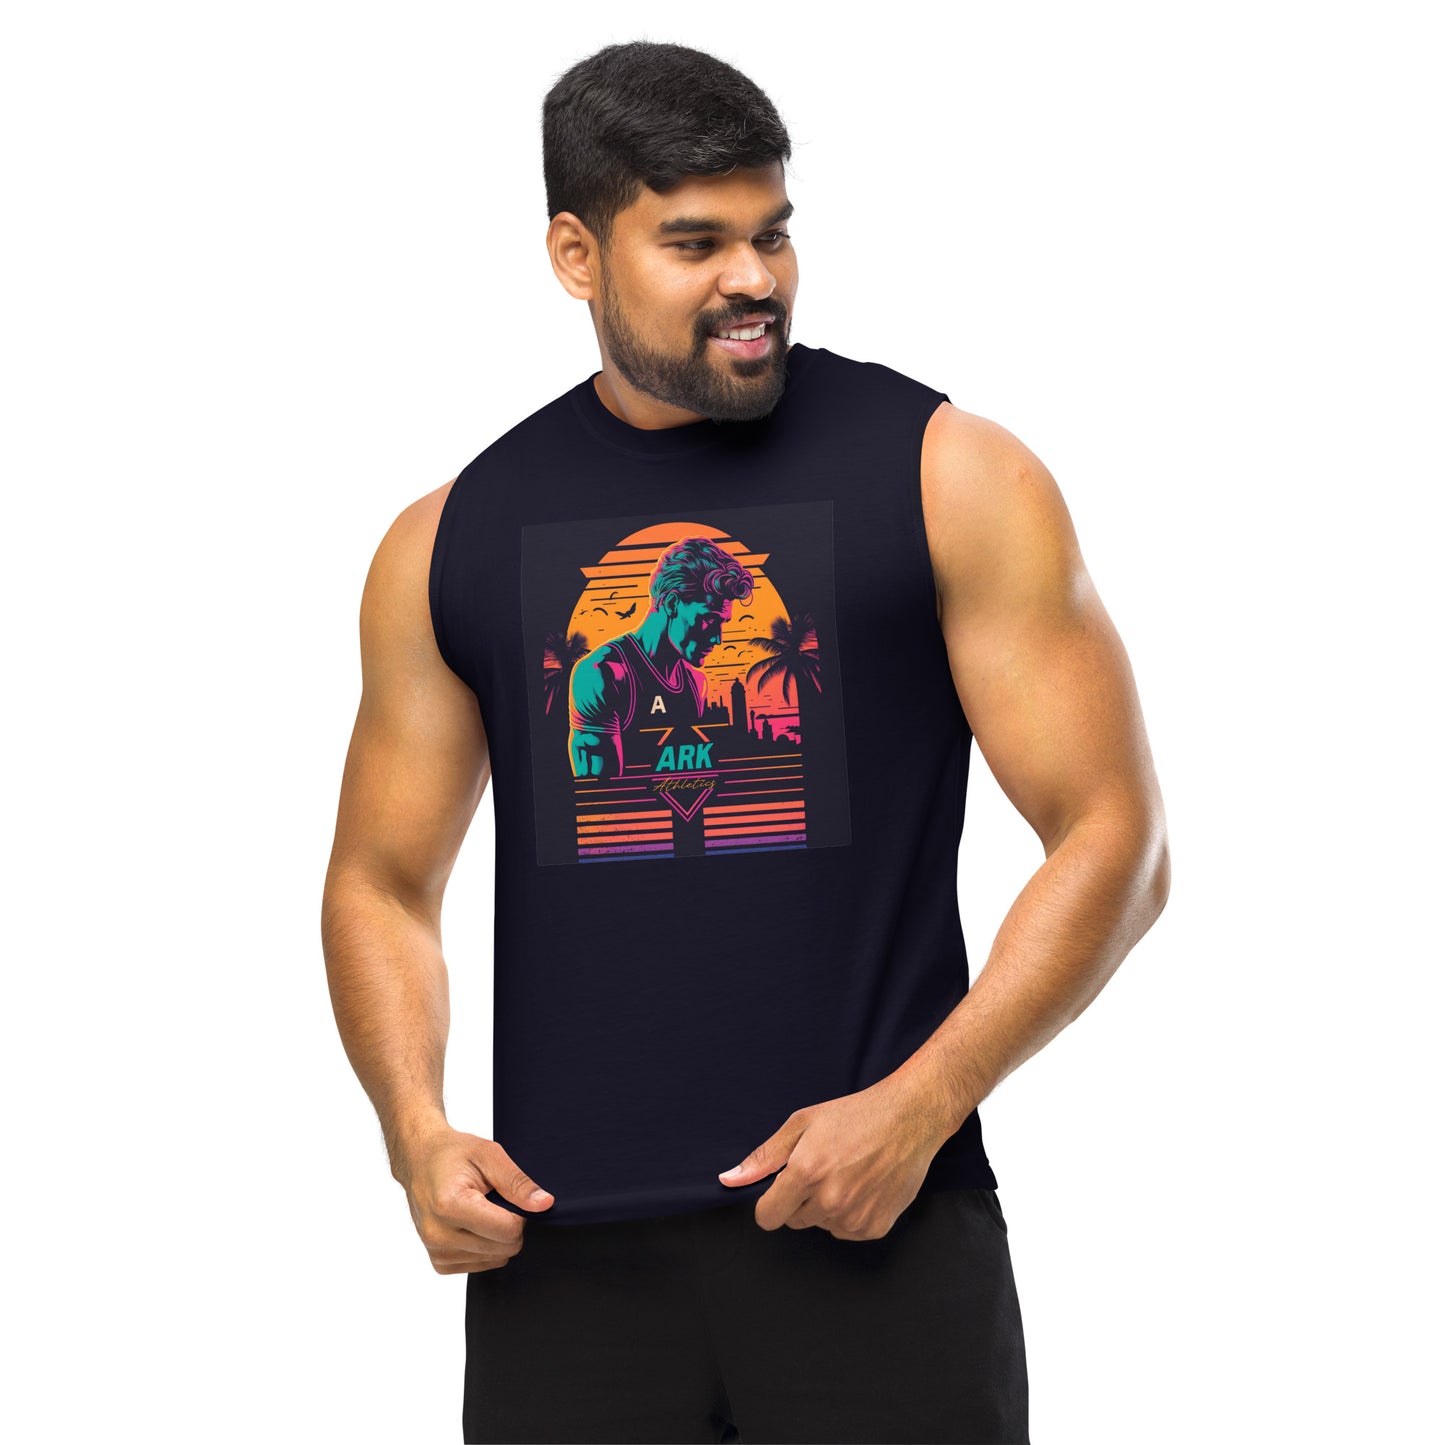 Ark Athlete Muscle Shirt